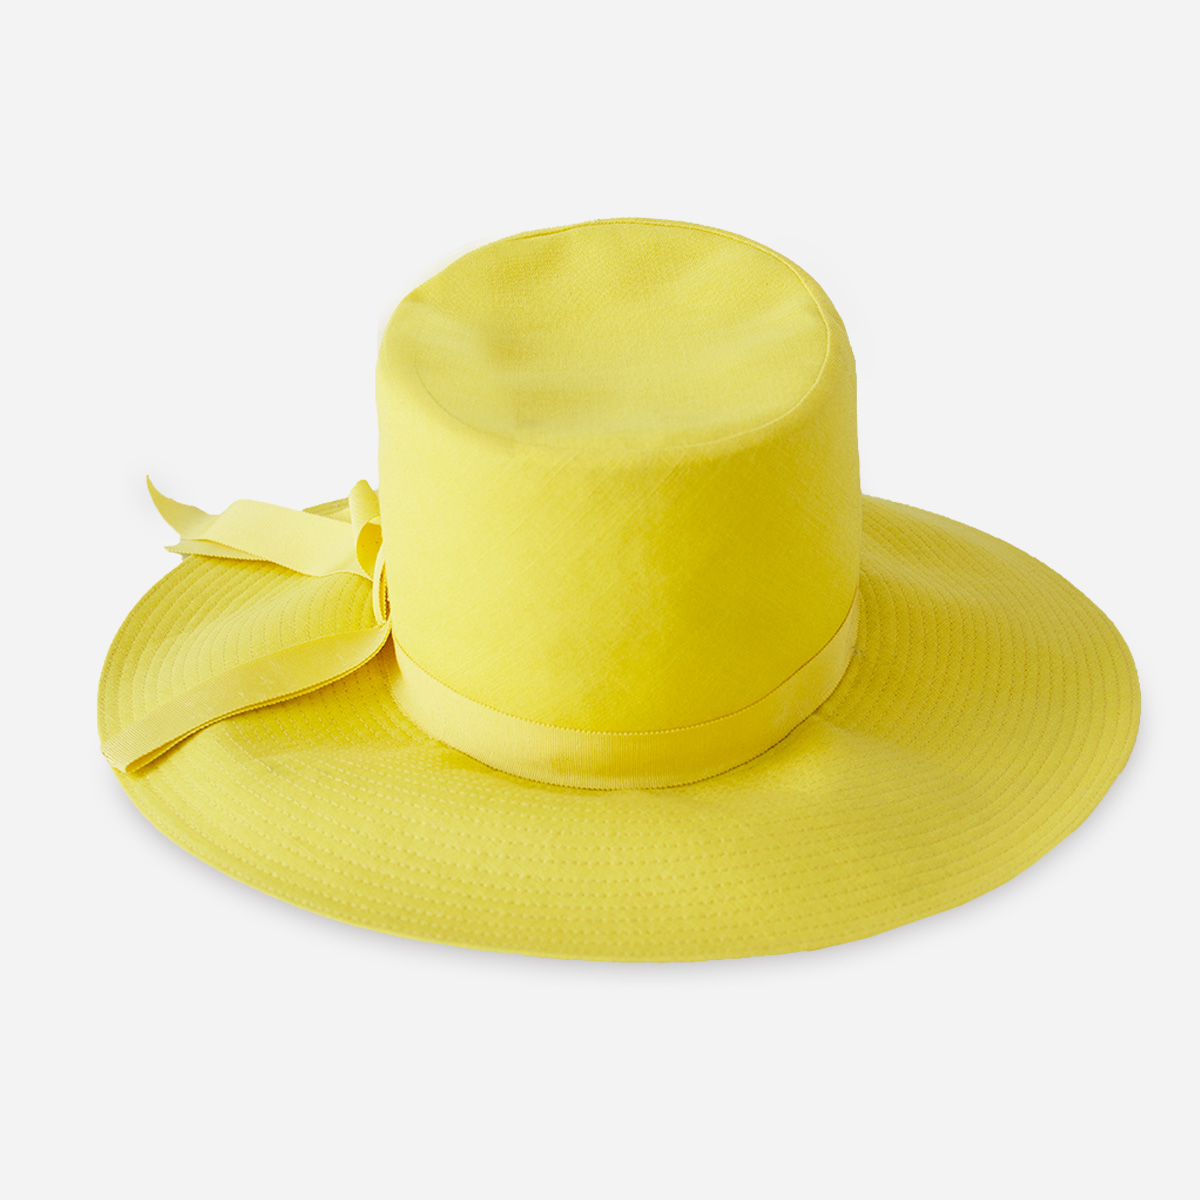 Yellow wide brim hat